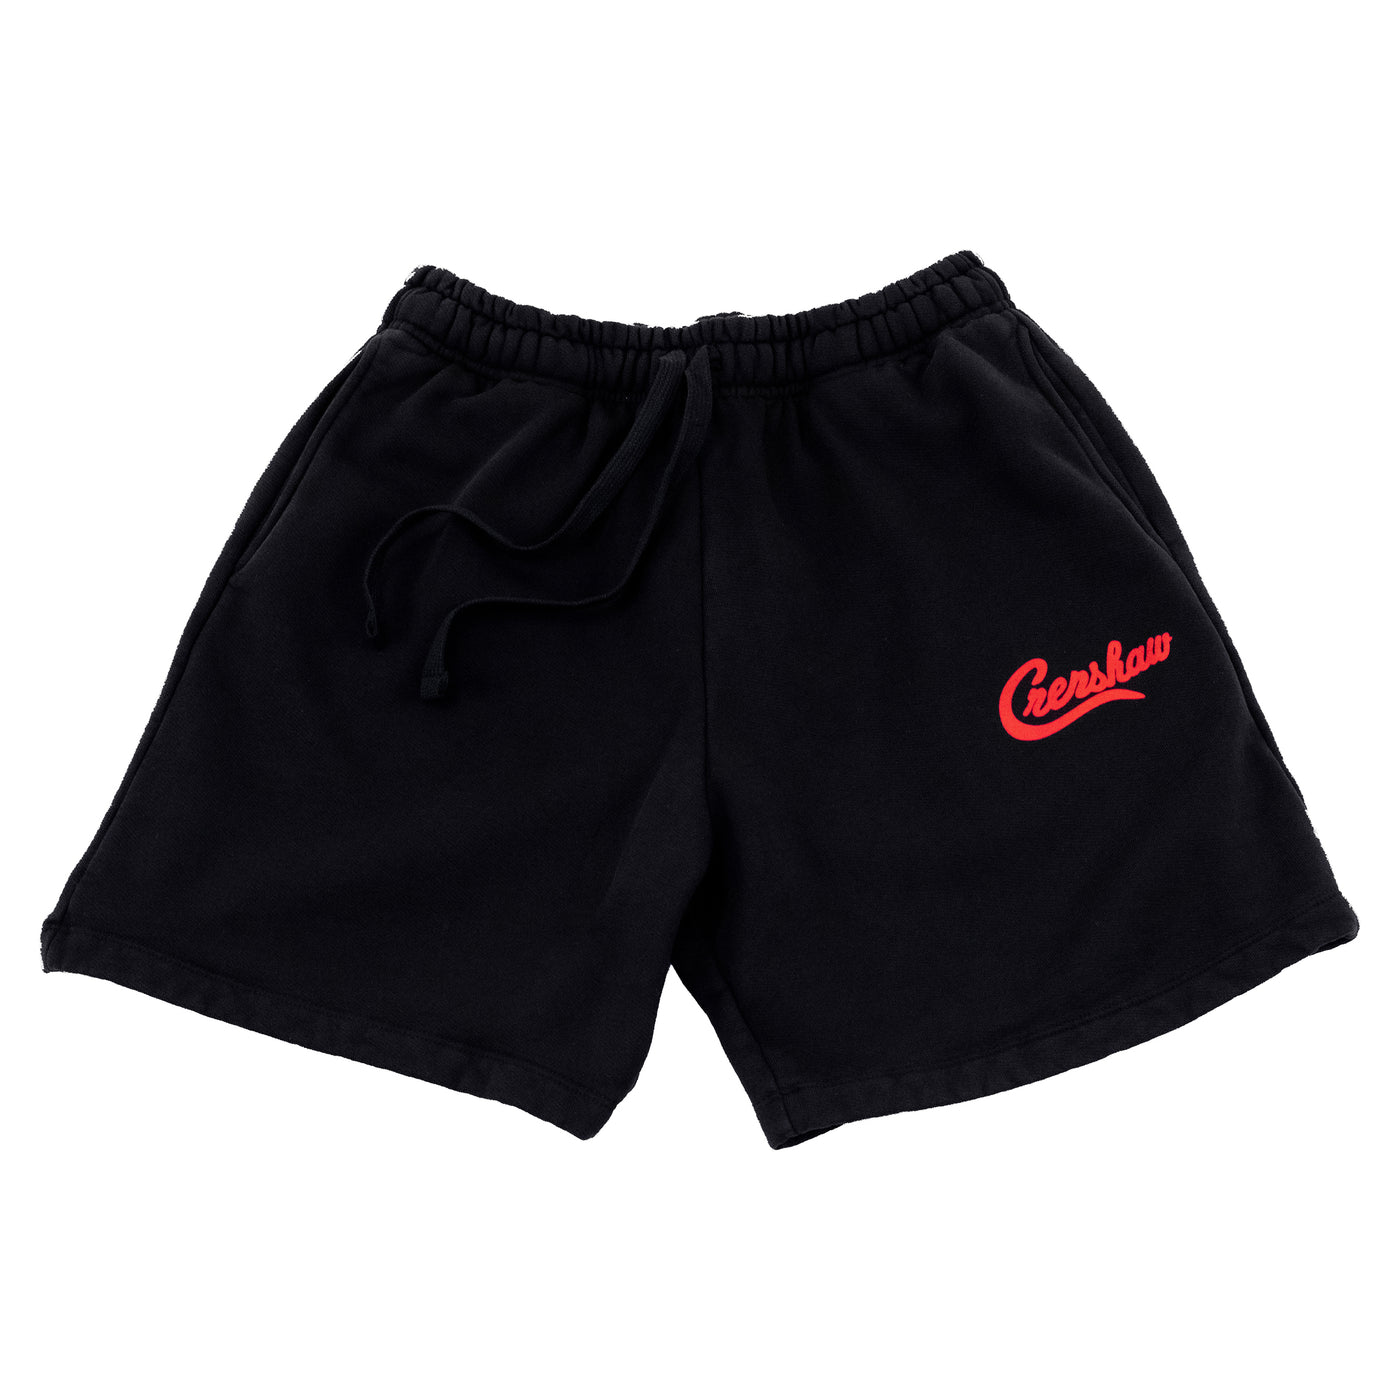 Crenshaw Classic LA Shorts - Black/Red